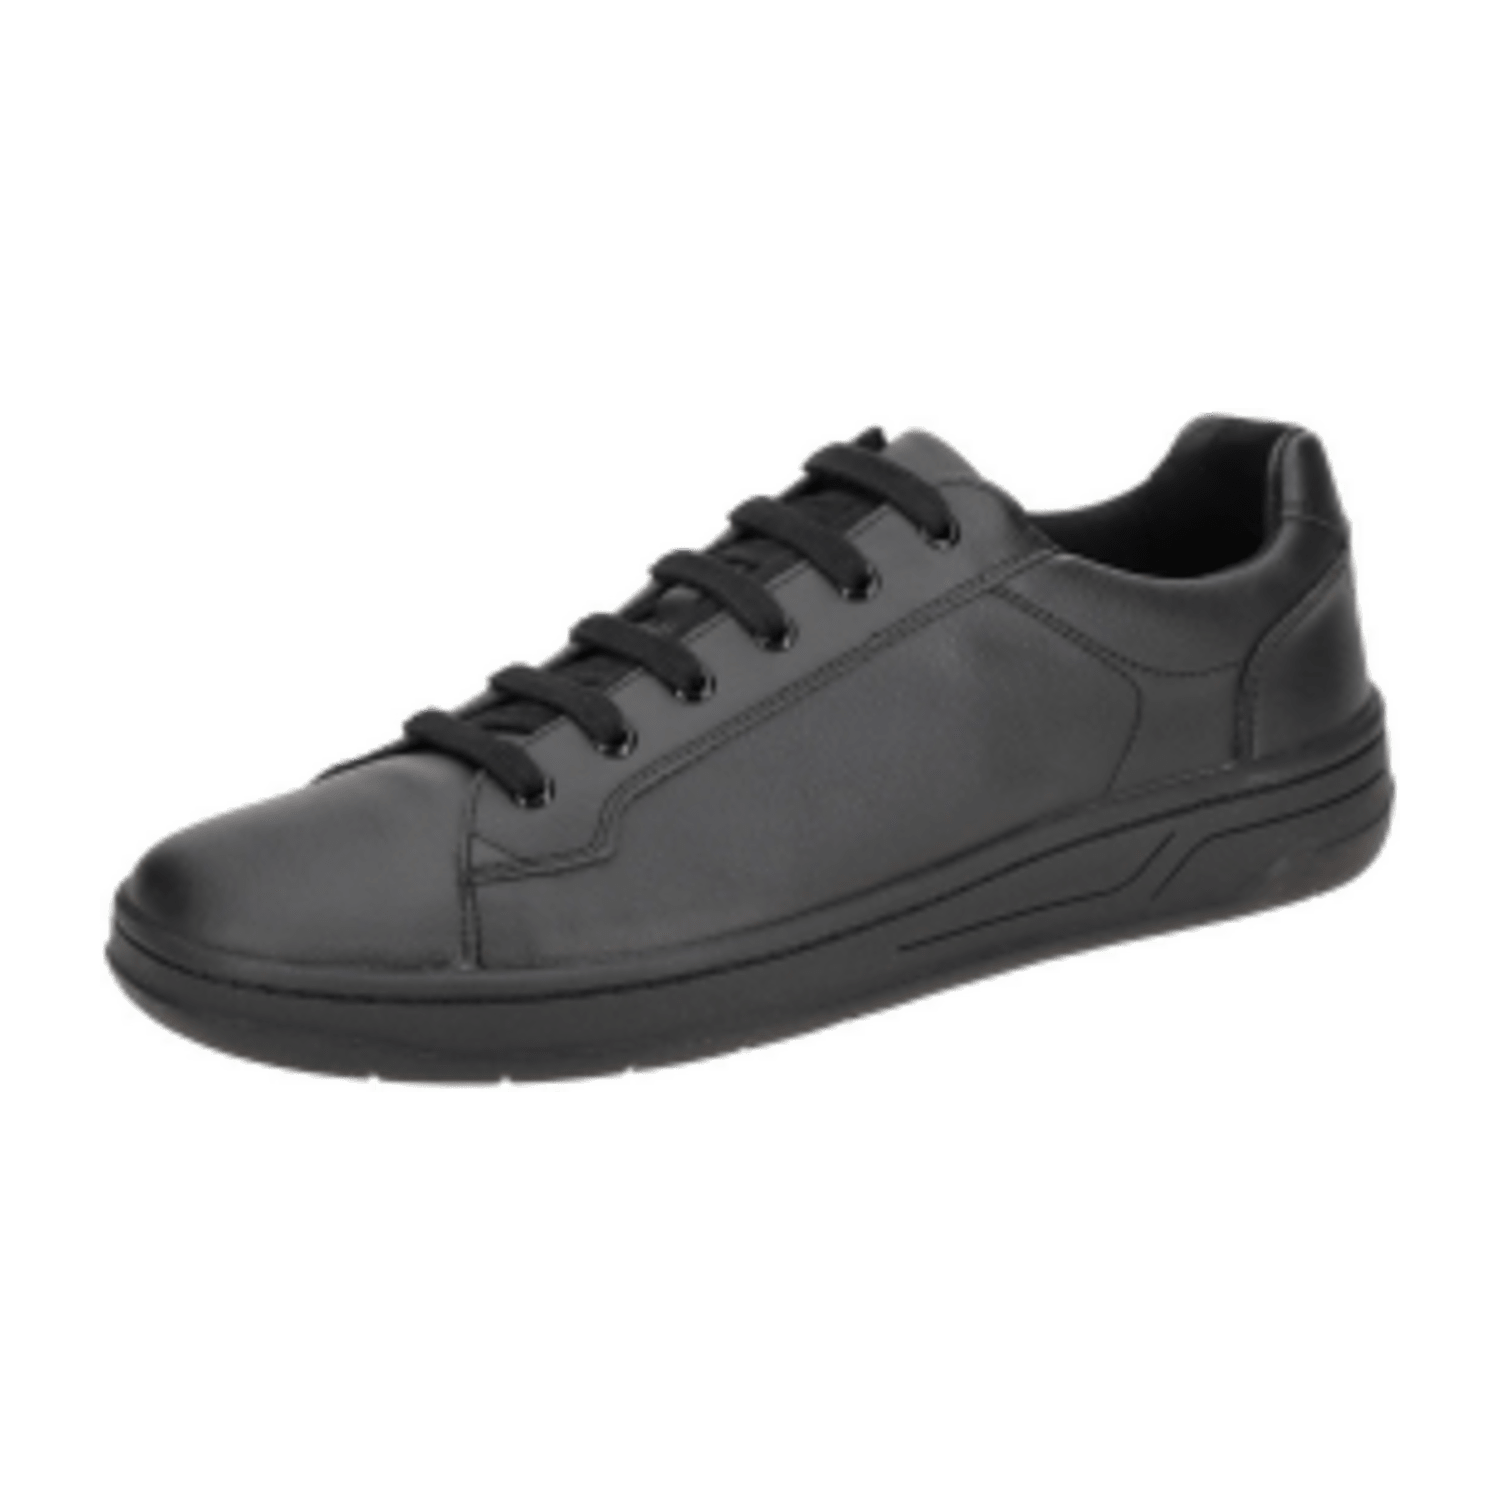 Geox MAGNETE Schuhe Sneaker schwarz Vegan U26DXG